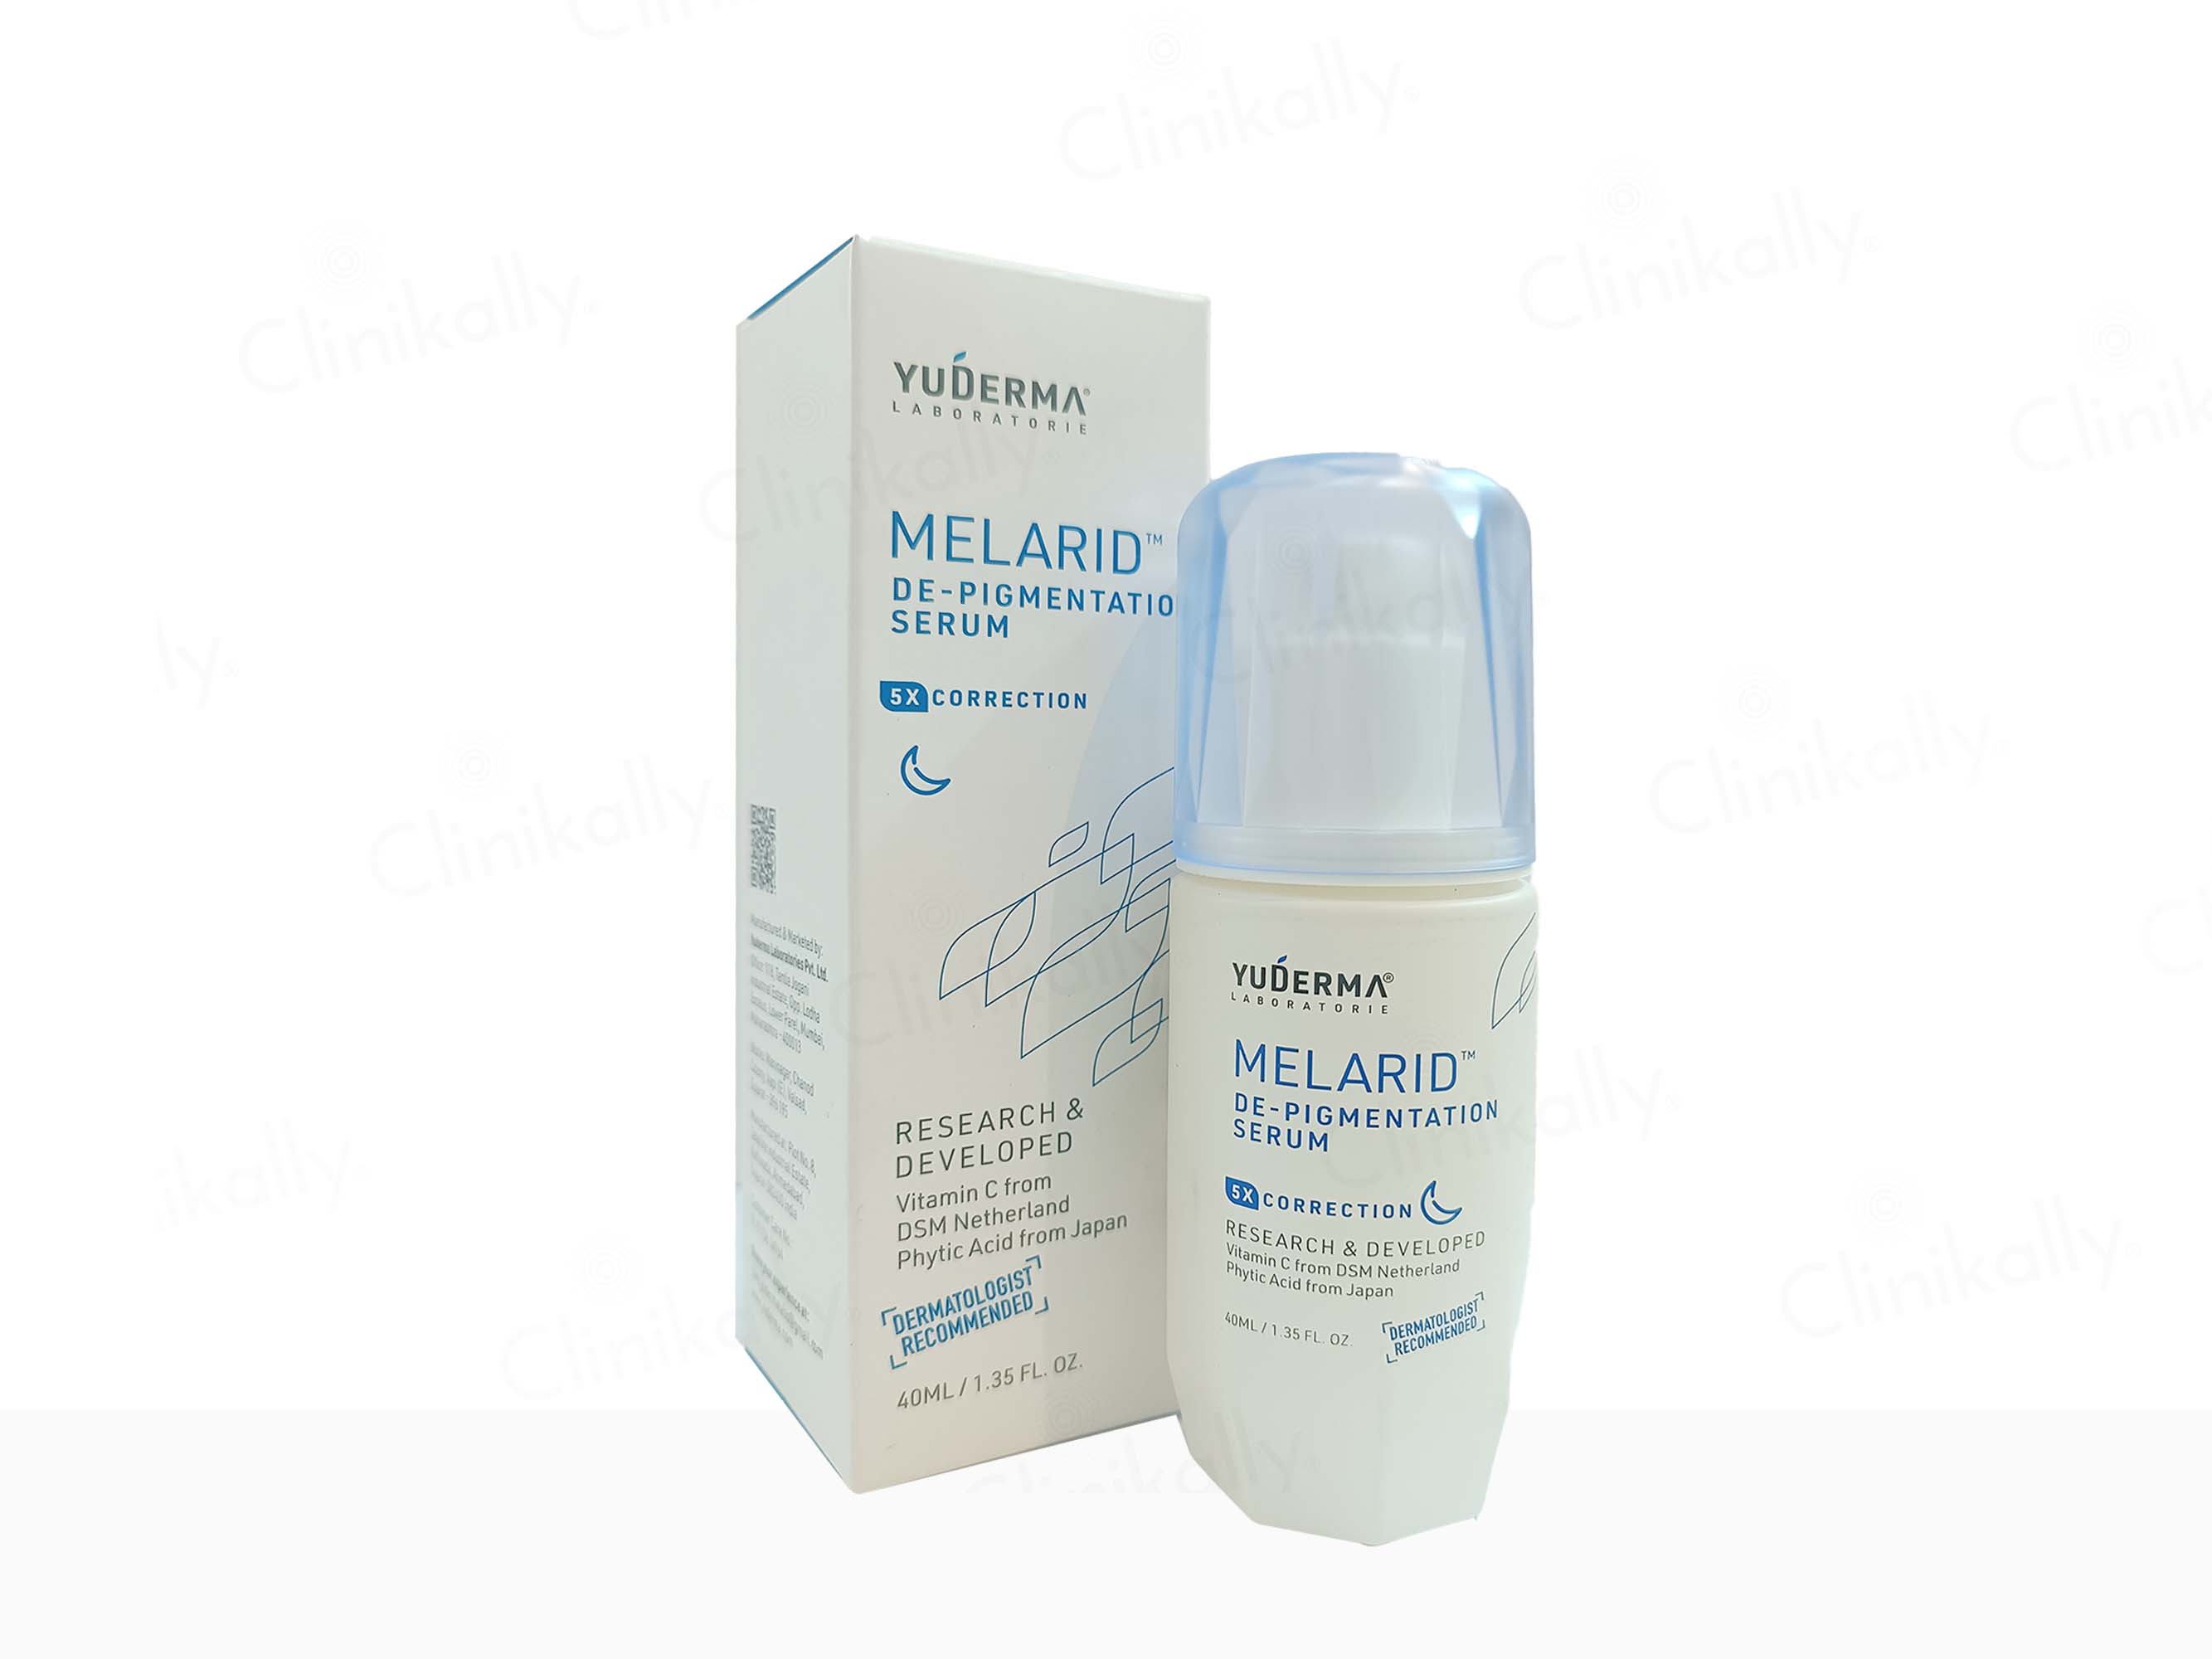 Yuderma Melarid De-pigmentation Serum - Clinikally